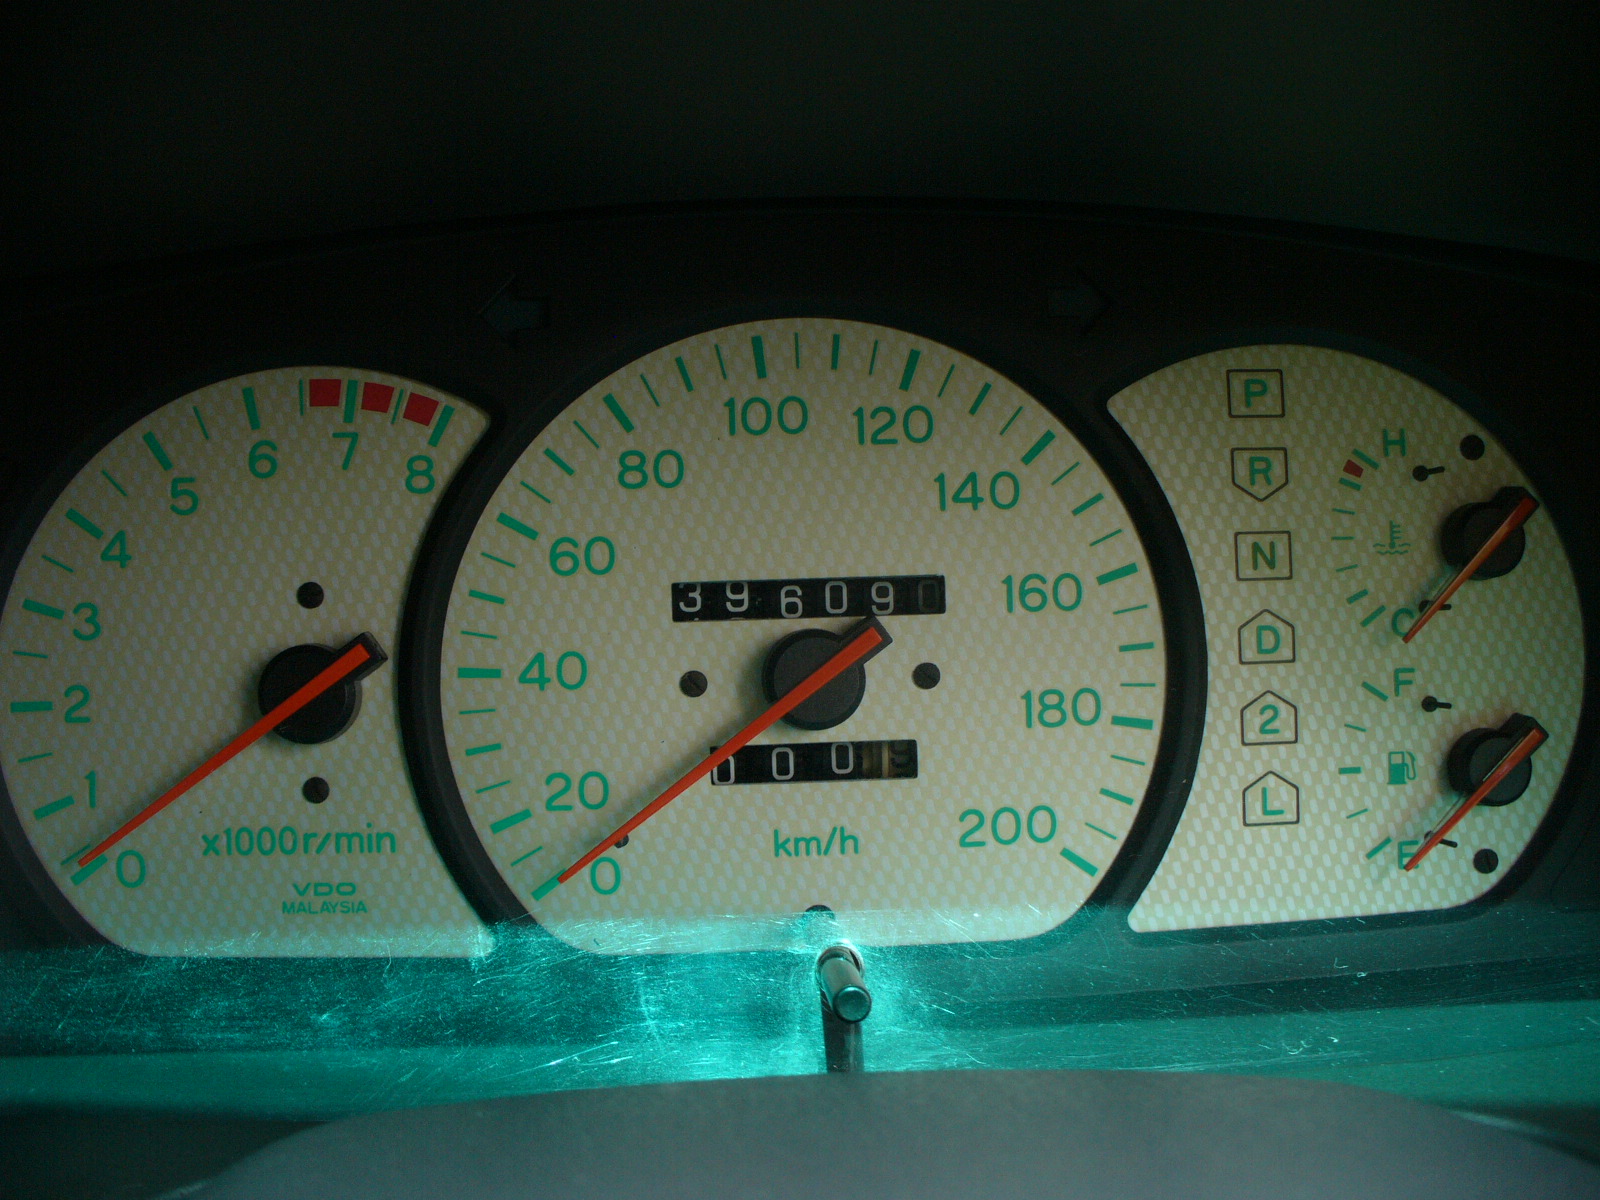 Stream Used Car: Proton Wira 1.5 Special Edition Auto 2004 WNL